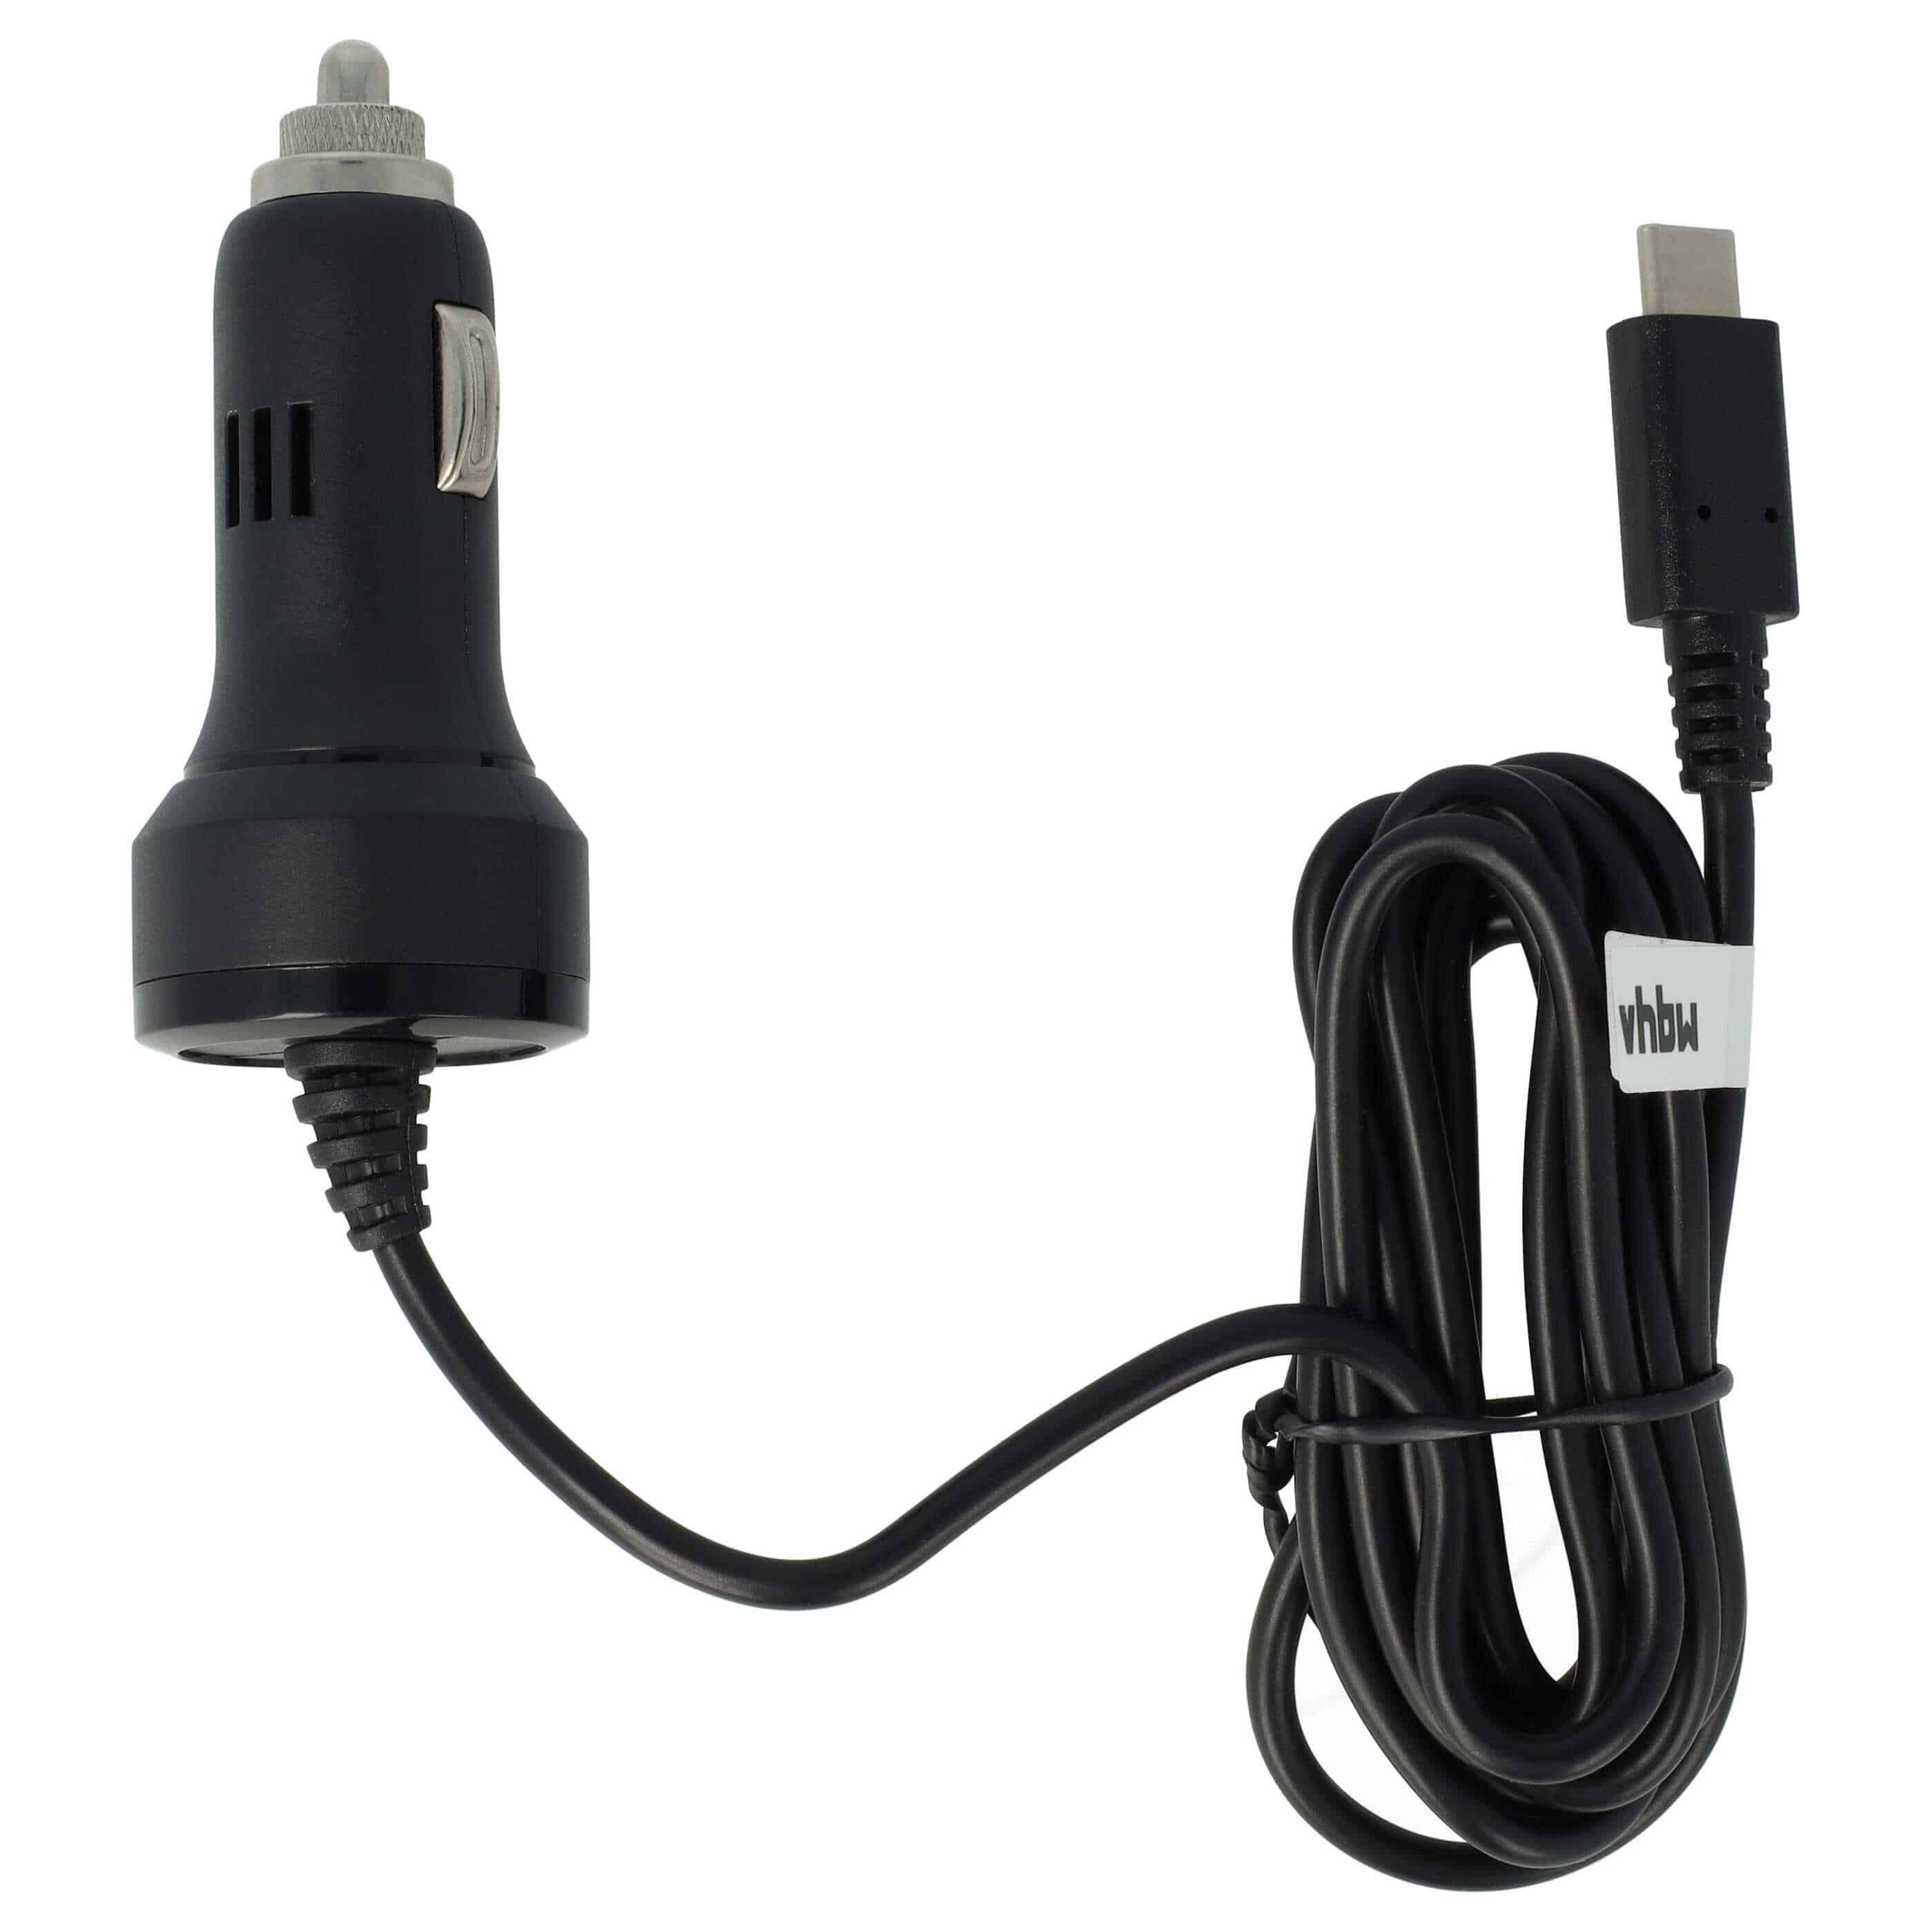 Chargeur voiture USB C 2,4 A pour smartphone, GPS Huawei et autres - allume-cigare